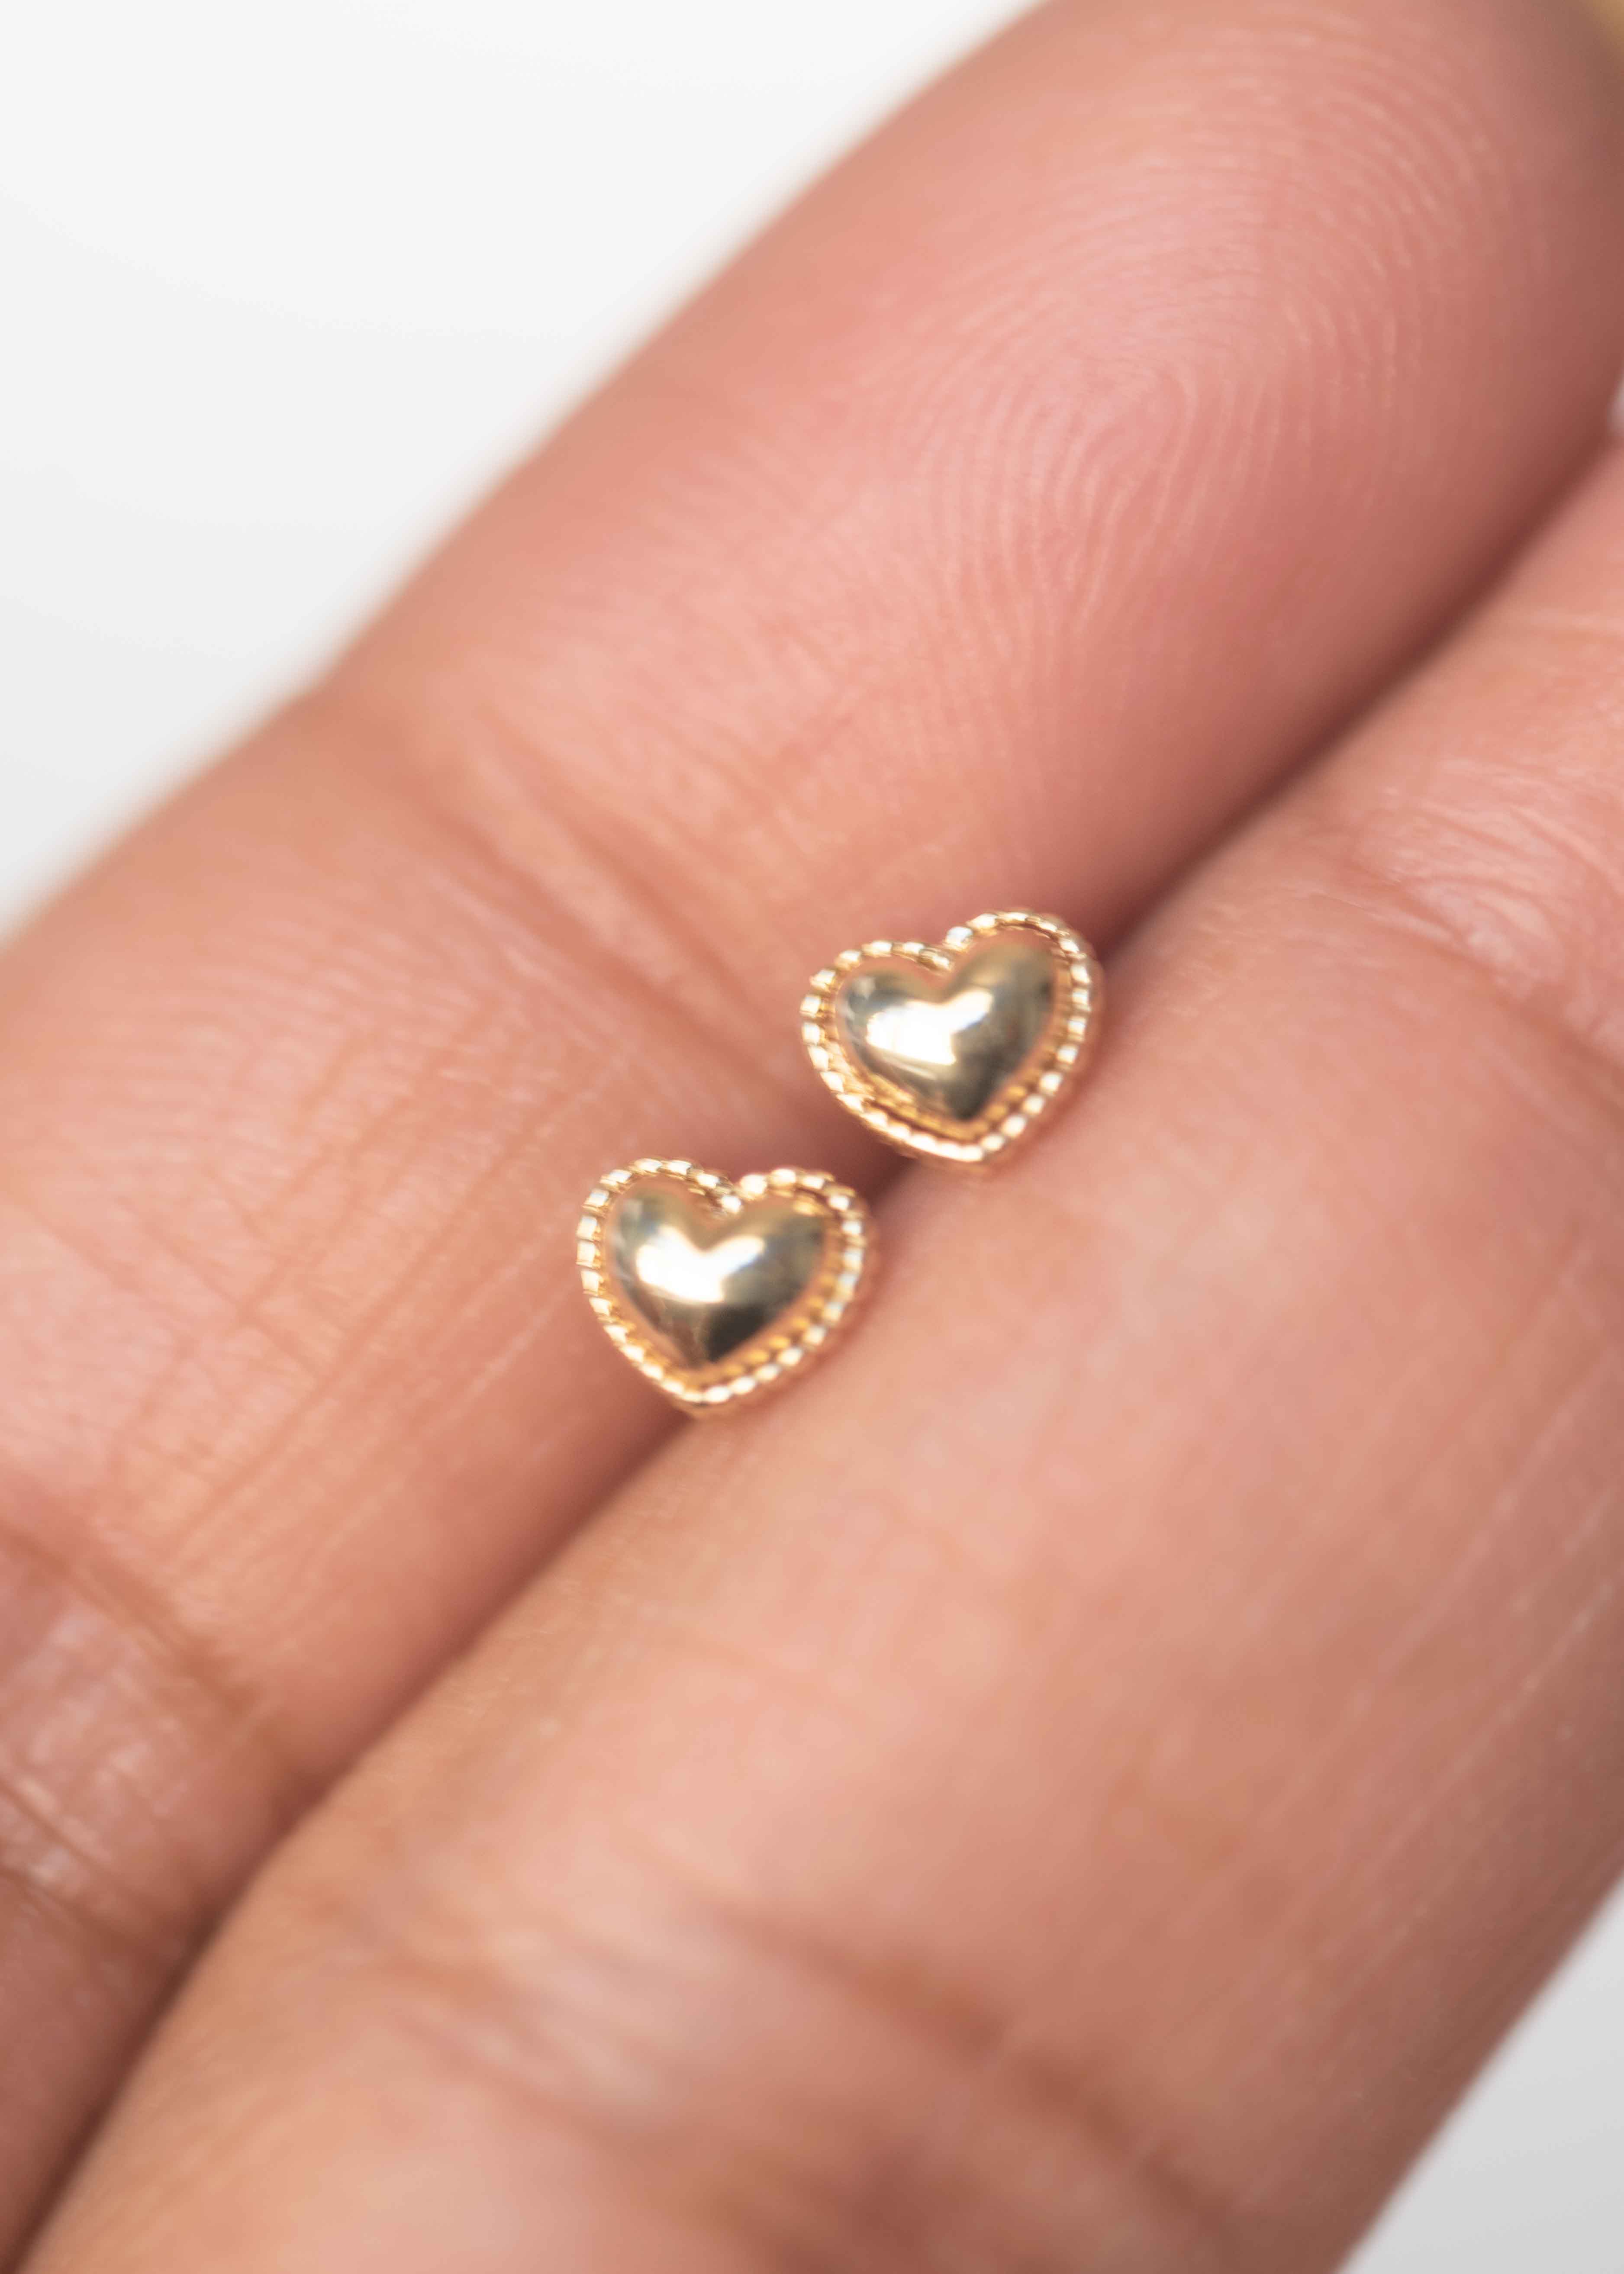 14k solid gold cartilage stud earrings